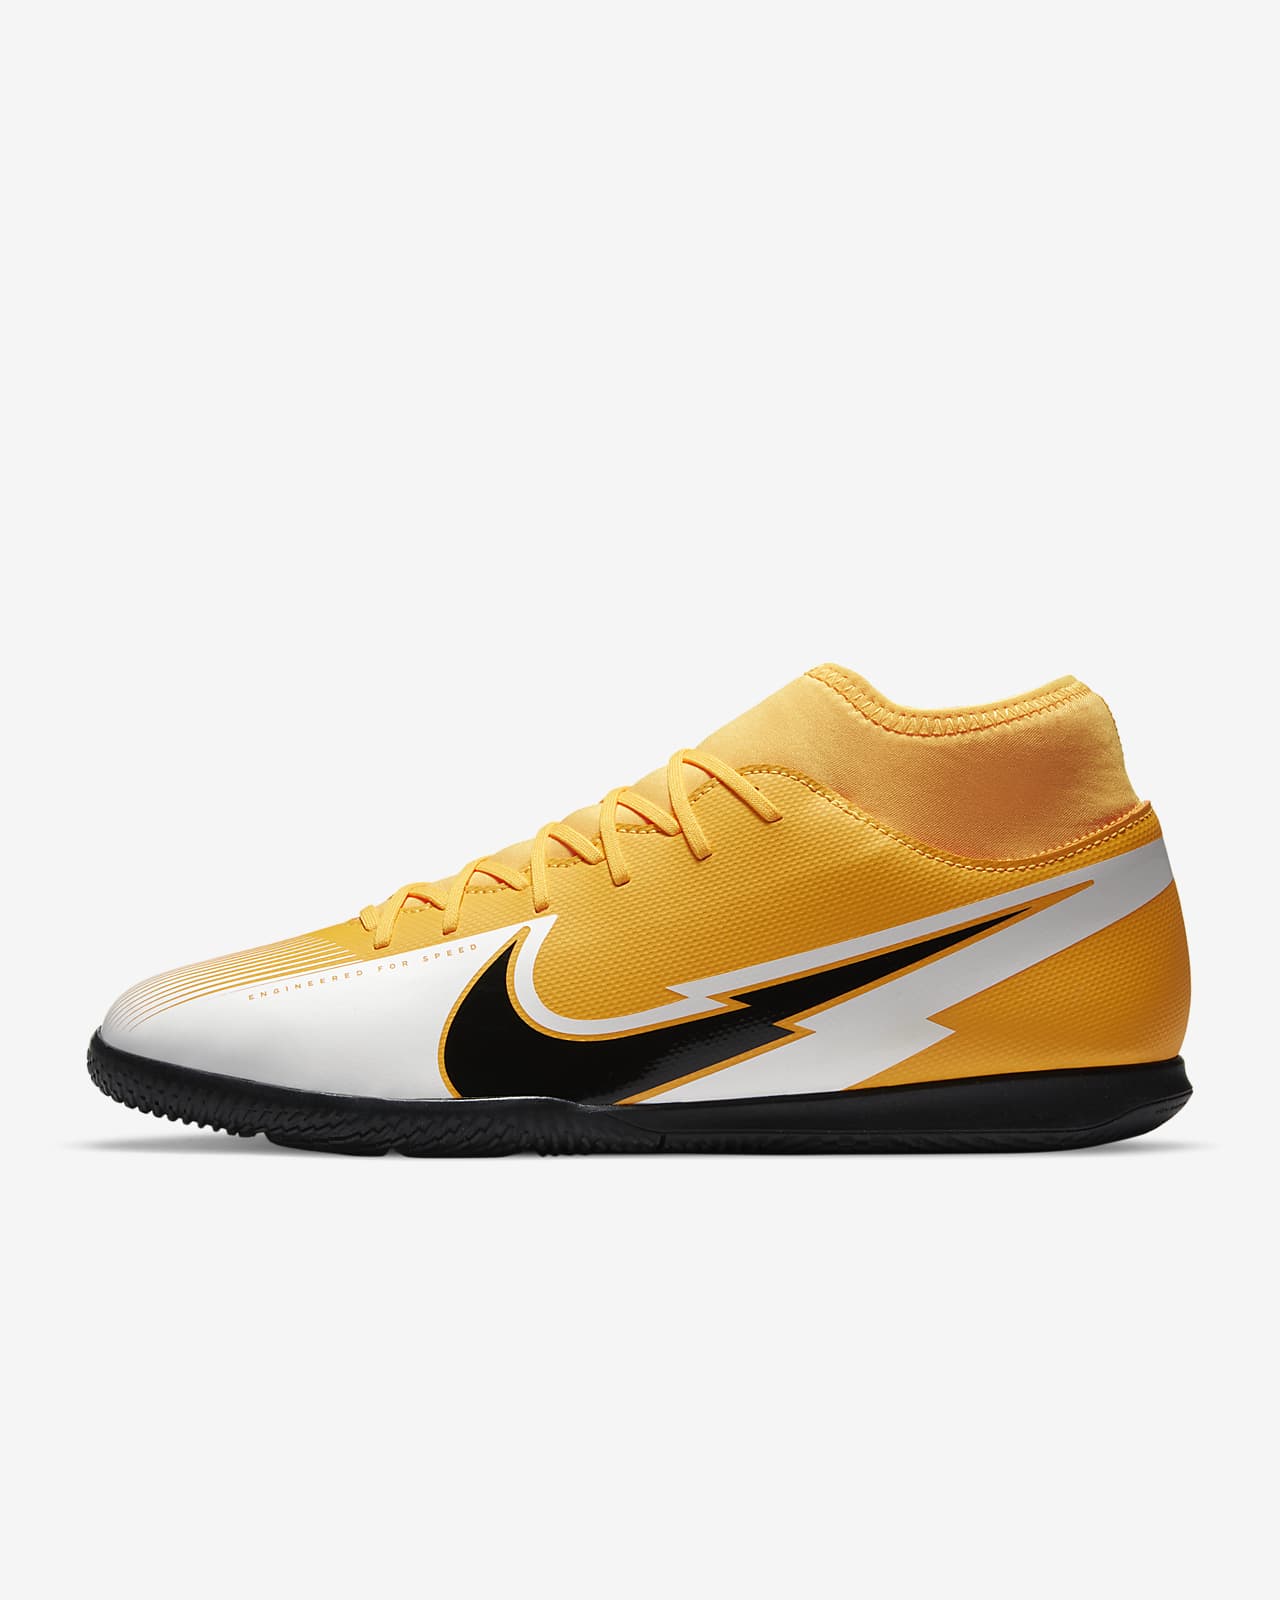 nike yellow football shoes